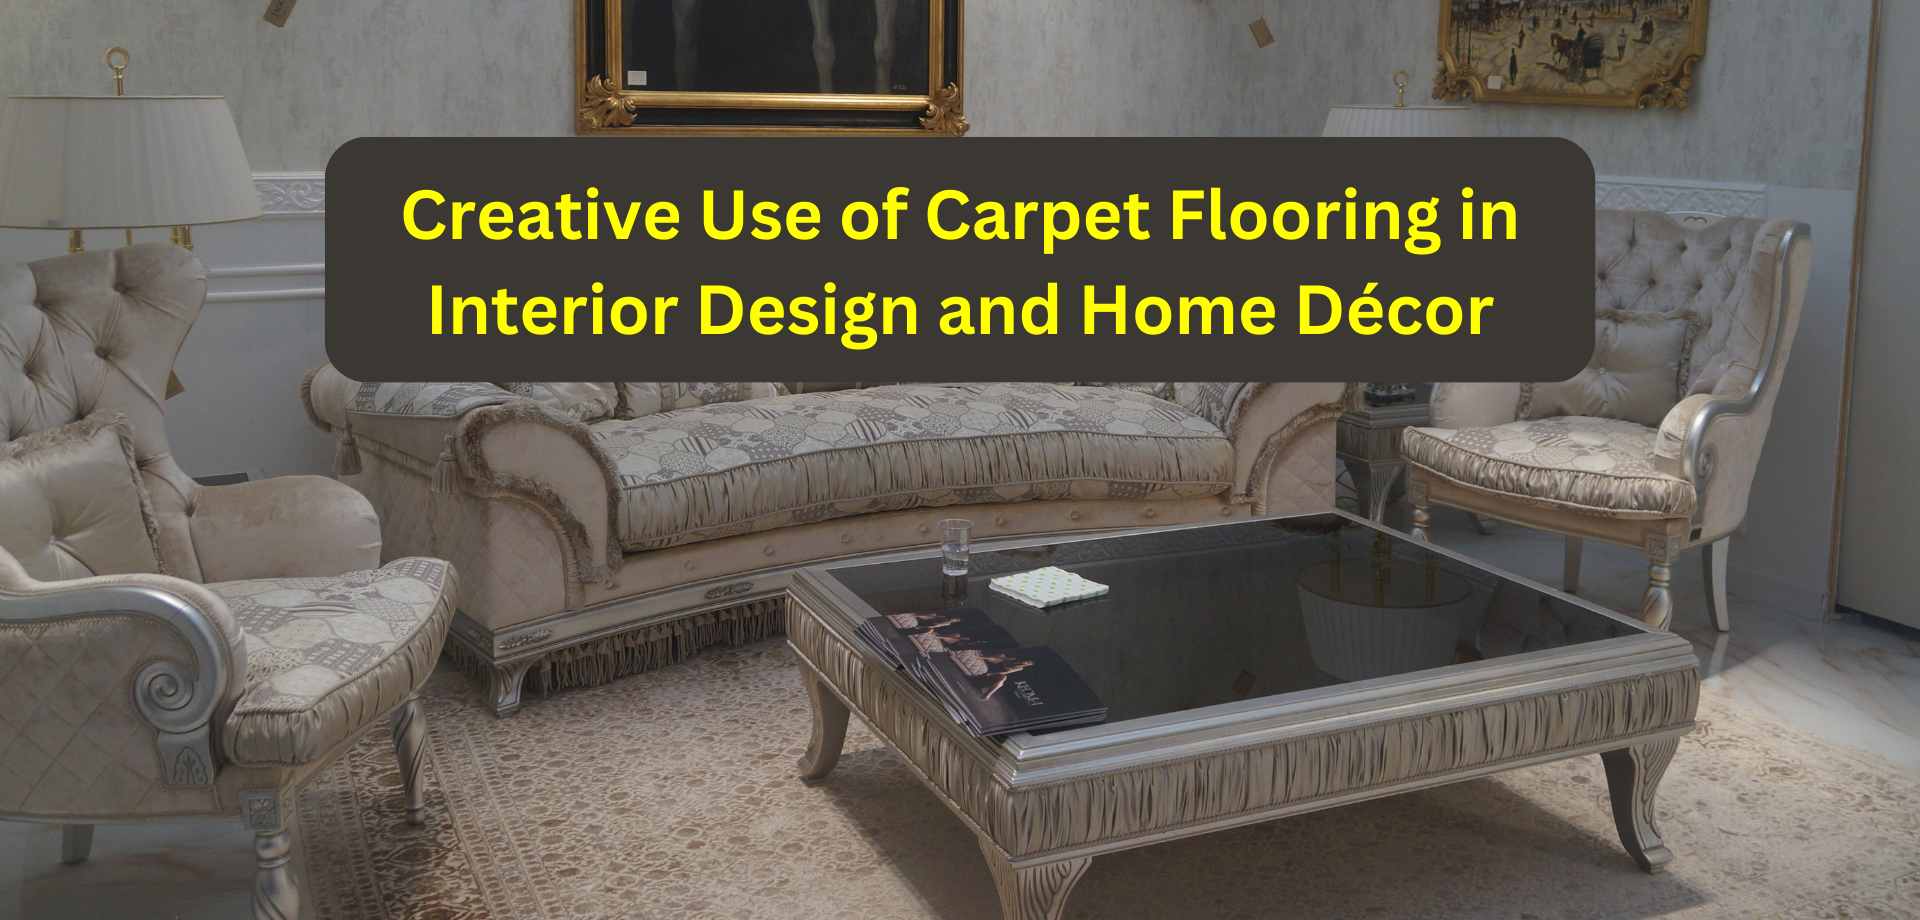 Carpet Flooring in Interior Design and Home Décor